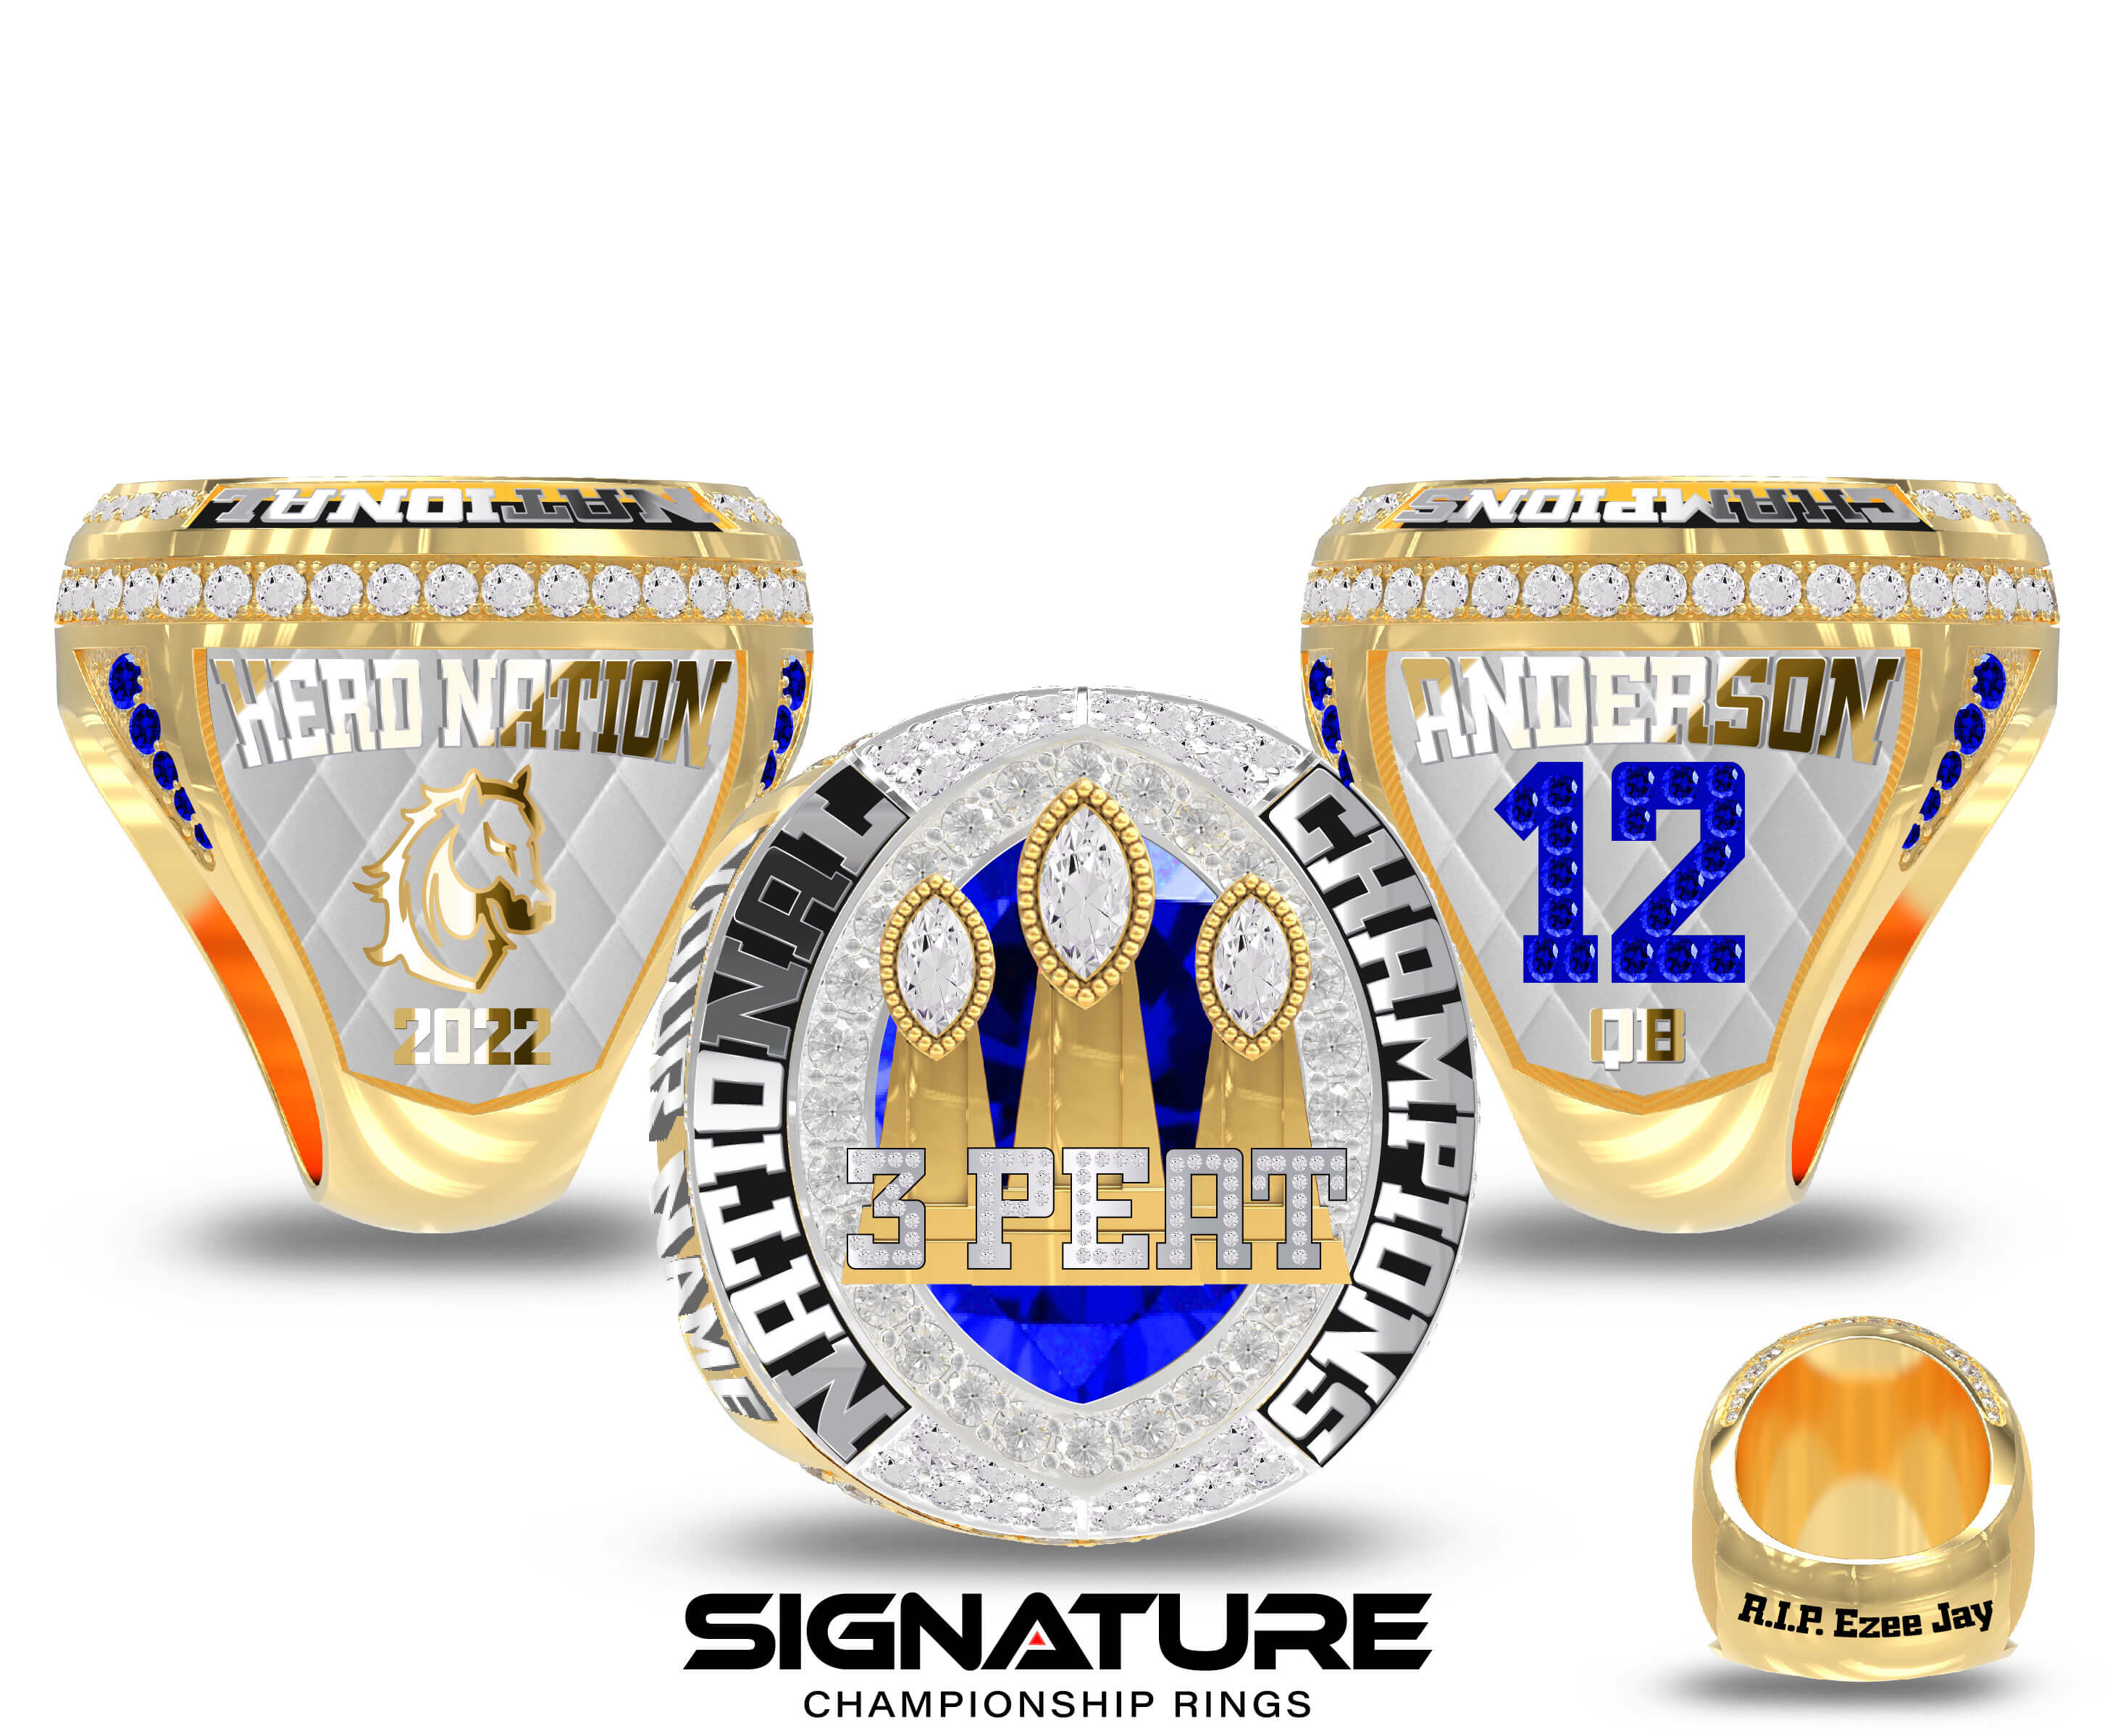 Championship Ring Design Gallery Signature Championship Rings